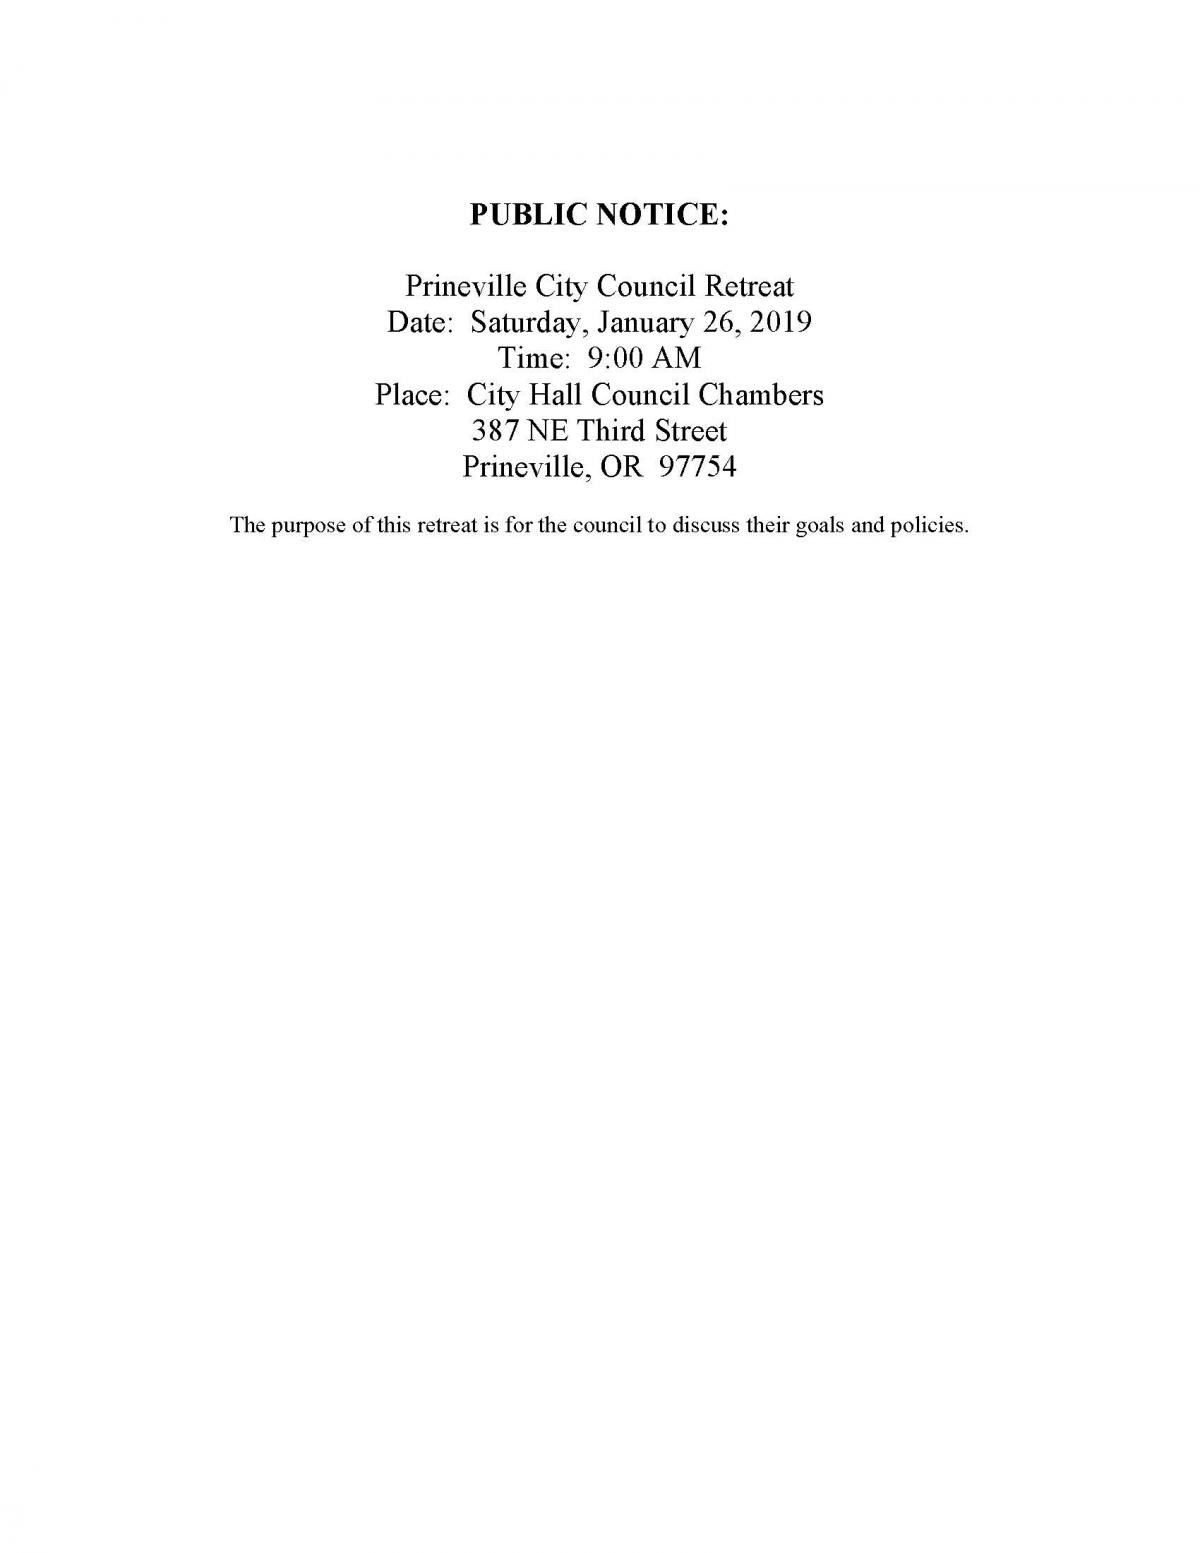 Council Retreat - Public Notice